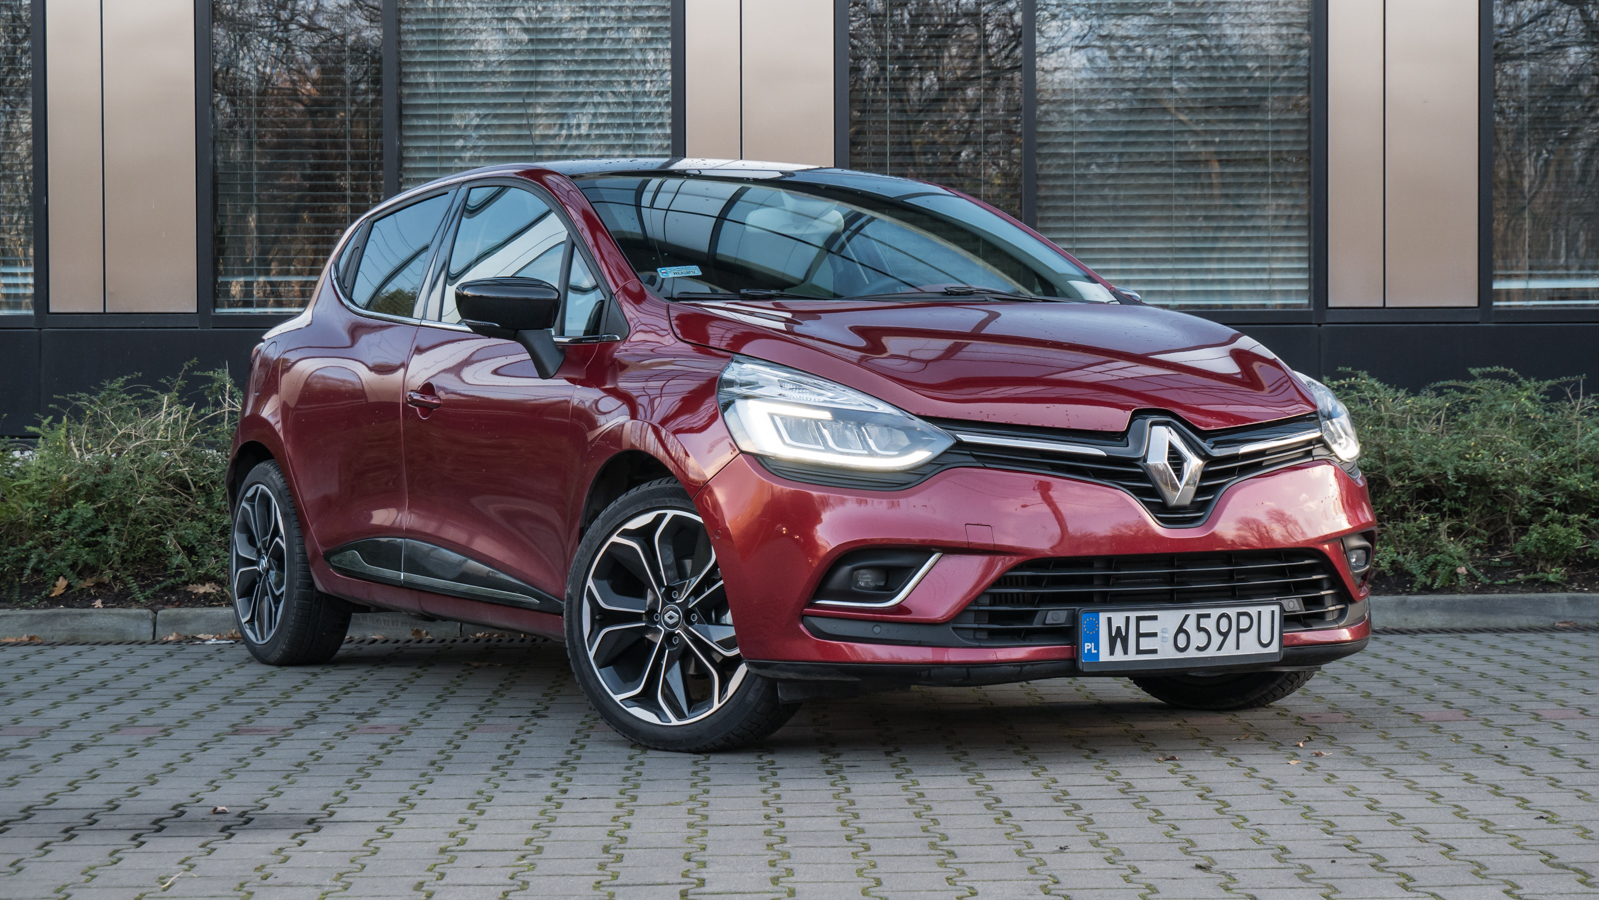 Test Renault Clio Intens 1.5 Dci 110 Km - Infor.pl